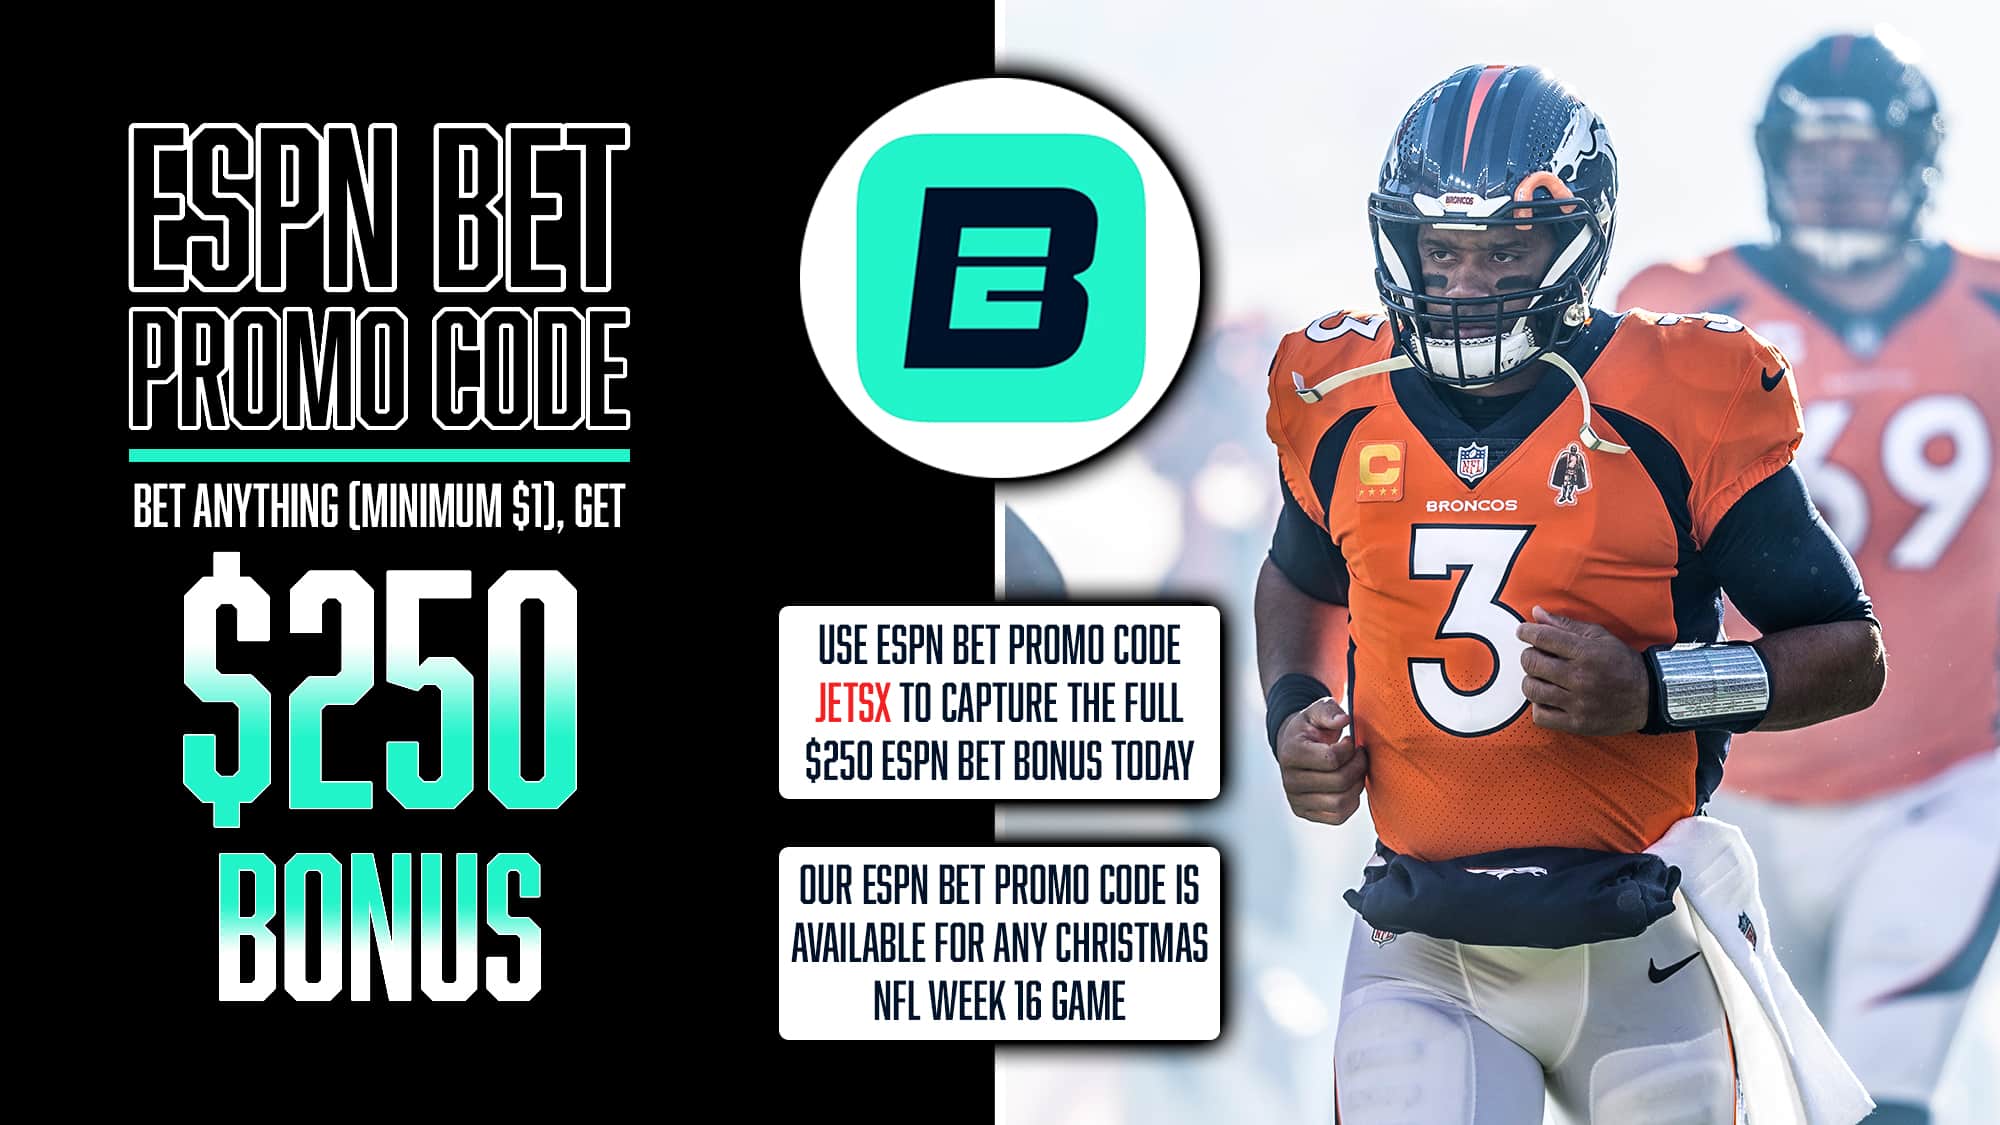 ESPN Bet Promo Code, JETSX, Christmas, NFL Week 16